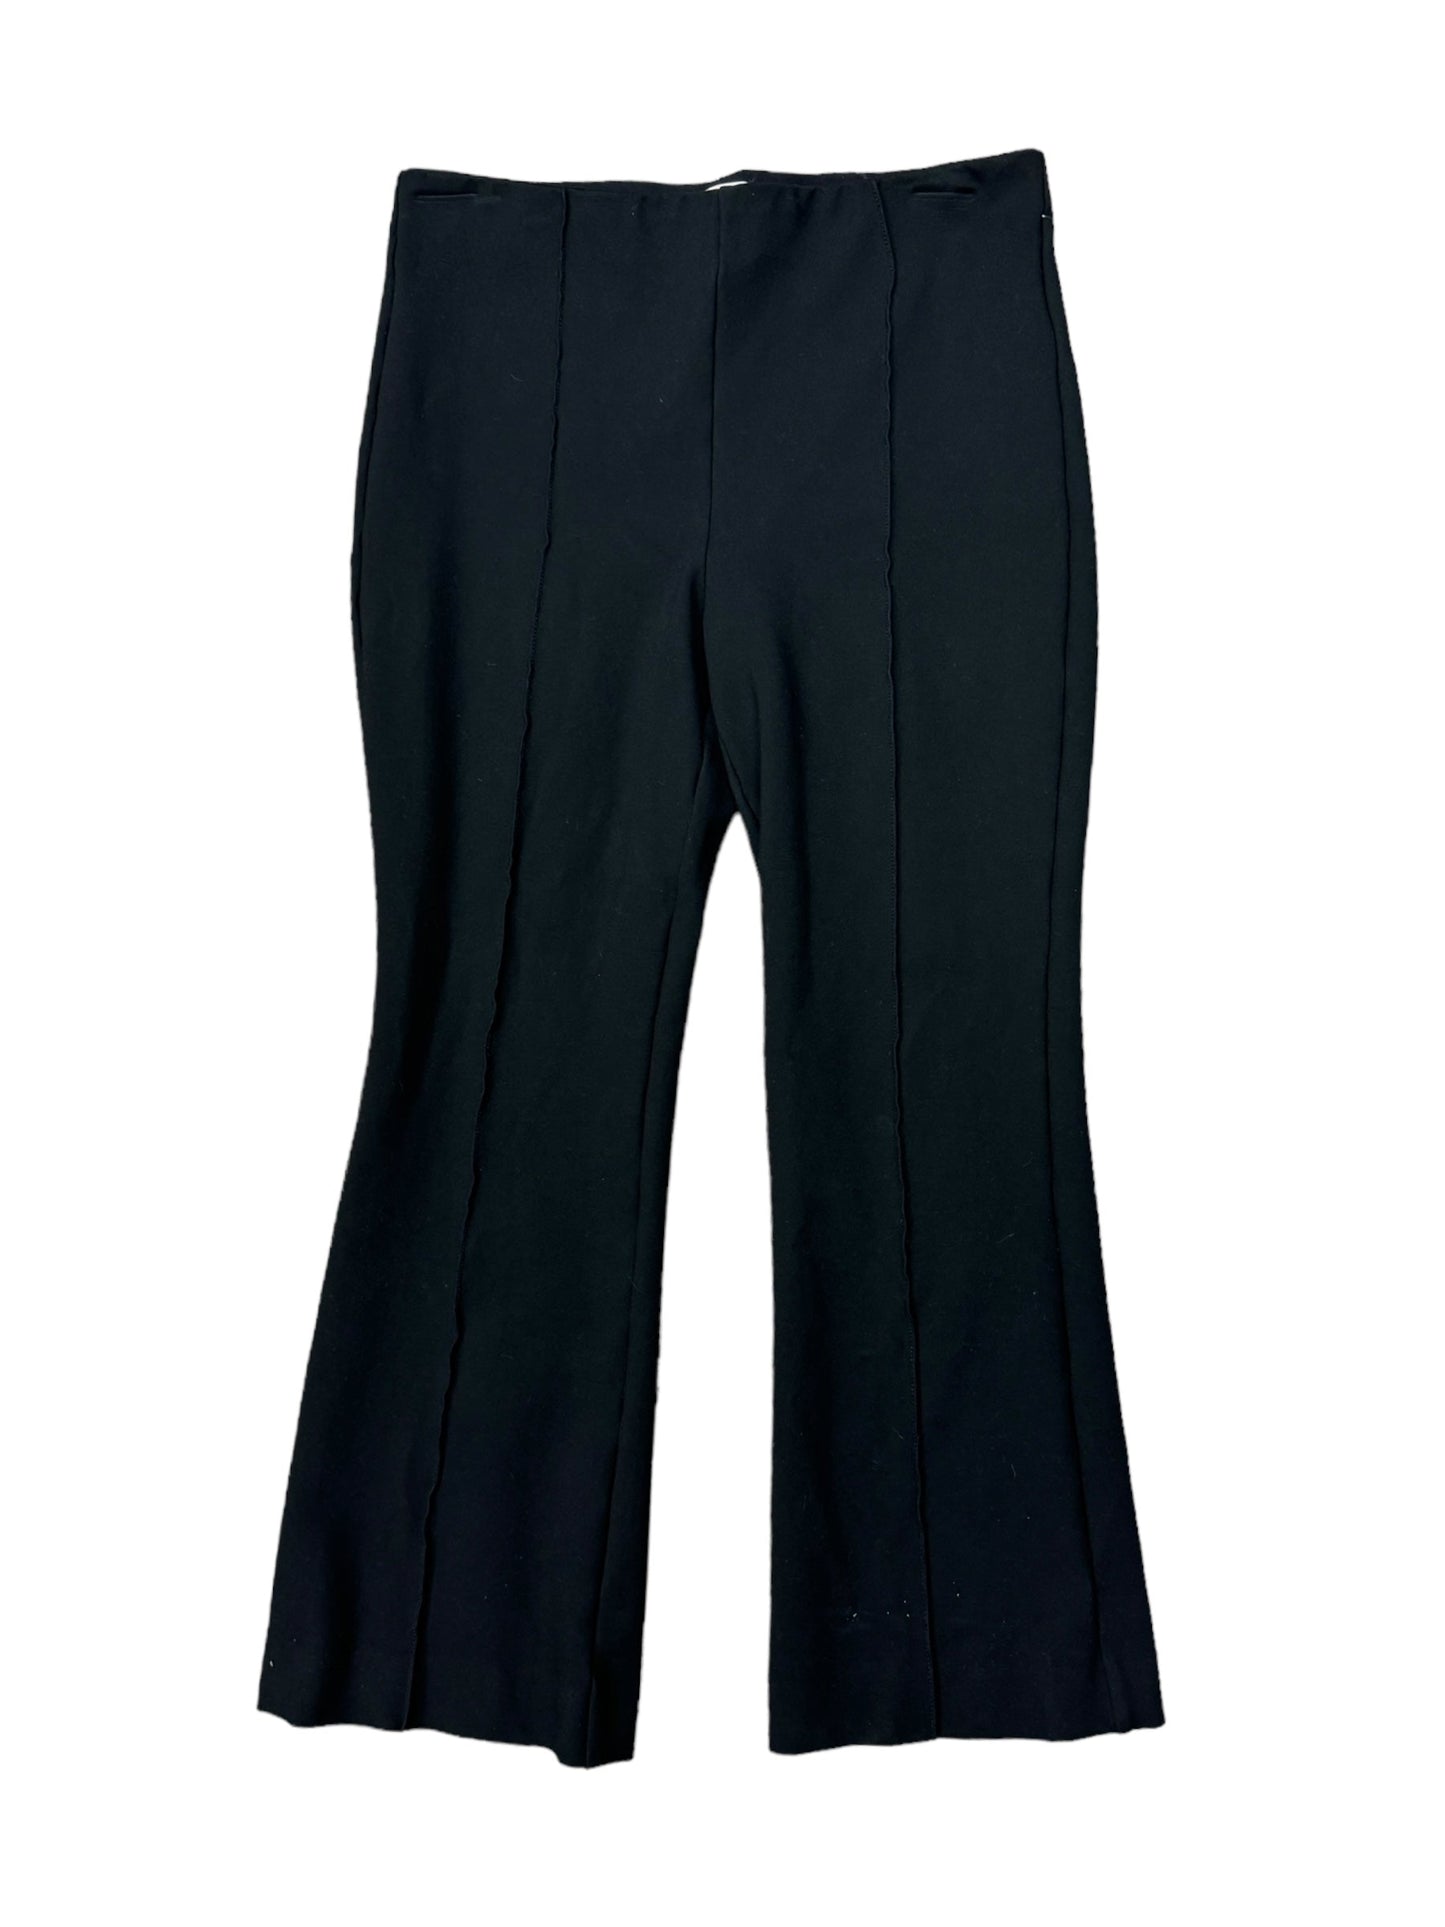 Black Pants Dress Maeve, Size 8